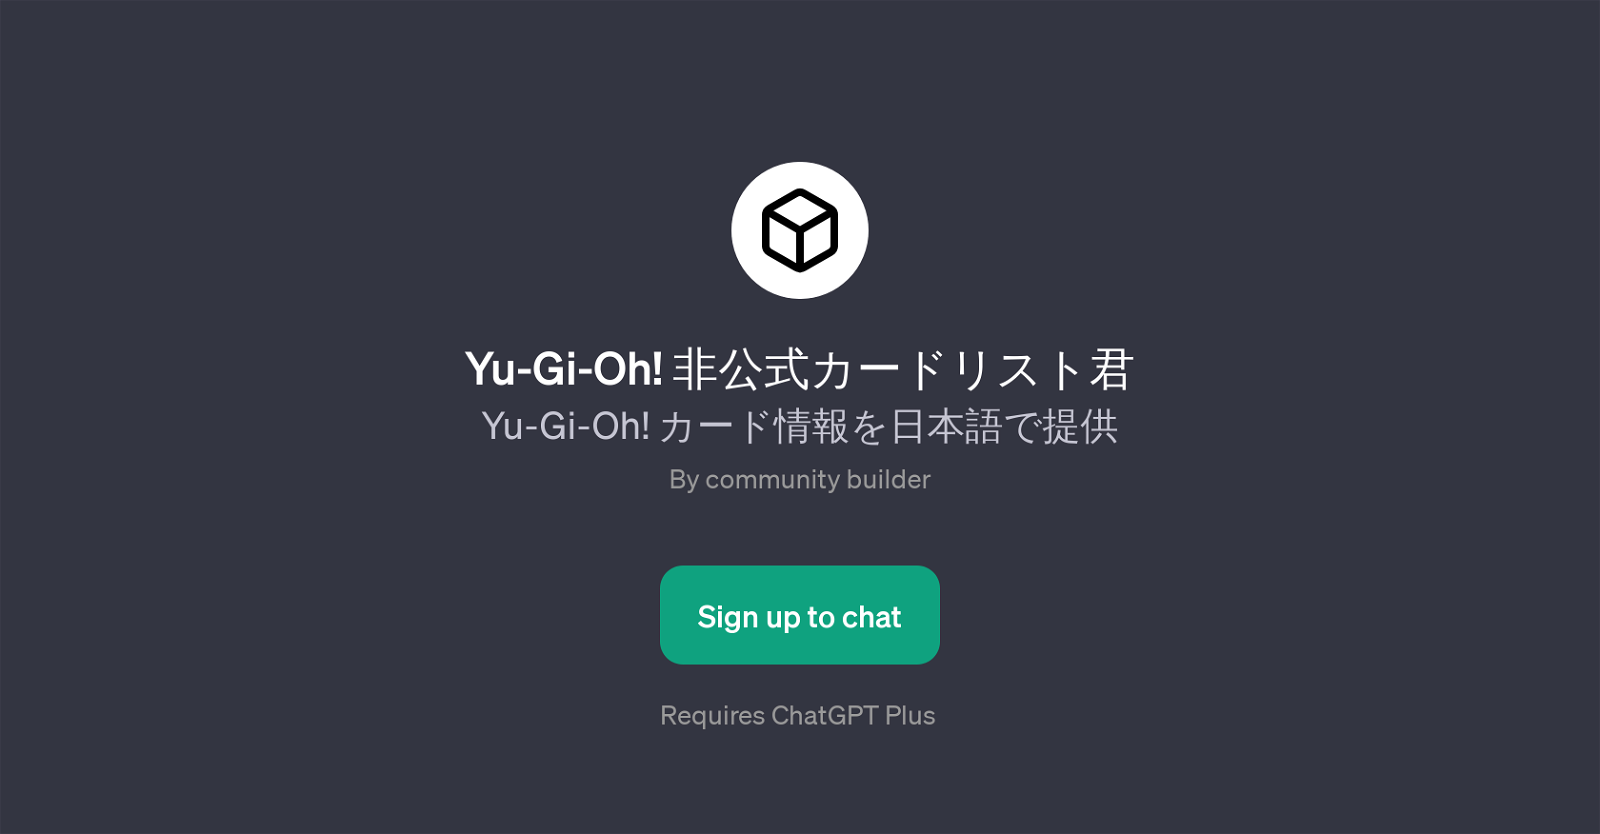 Yu-Gi-Oh! website